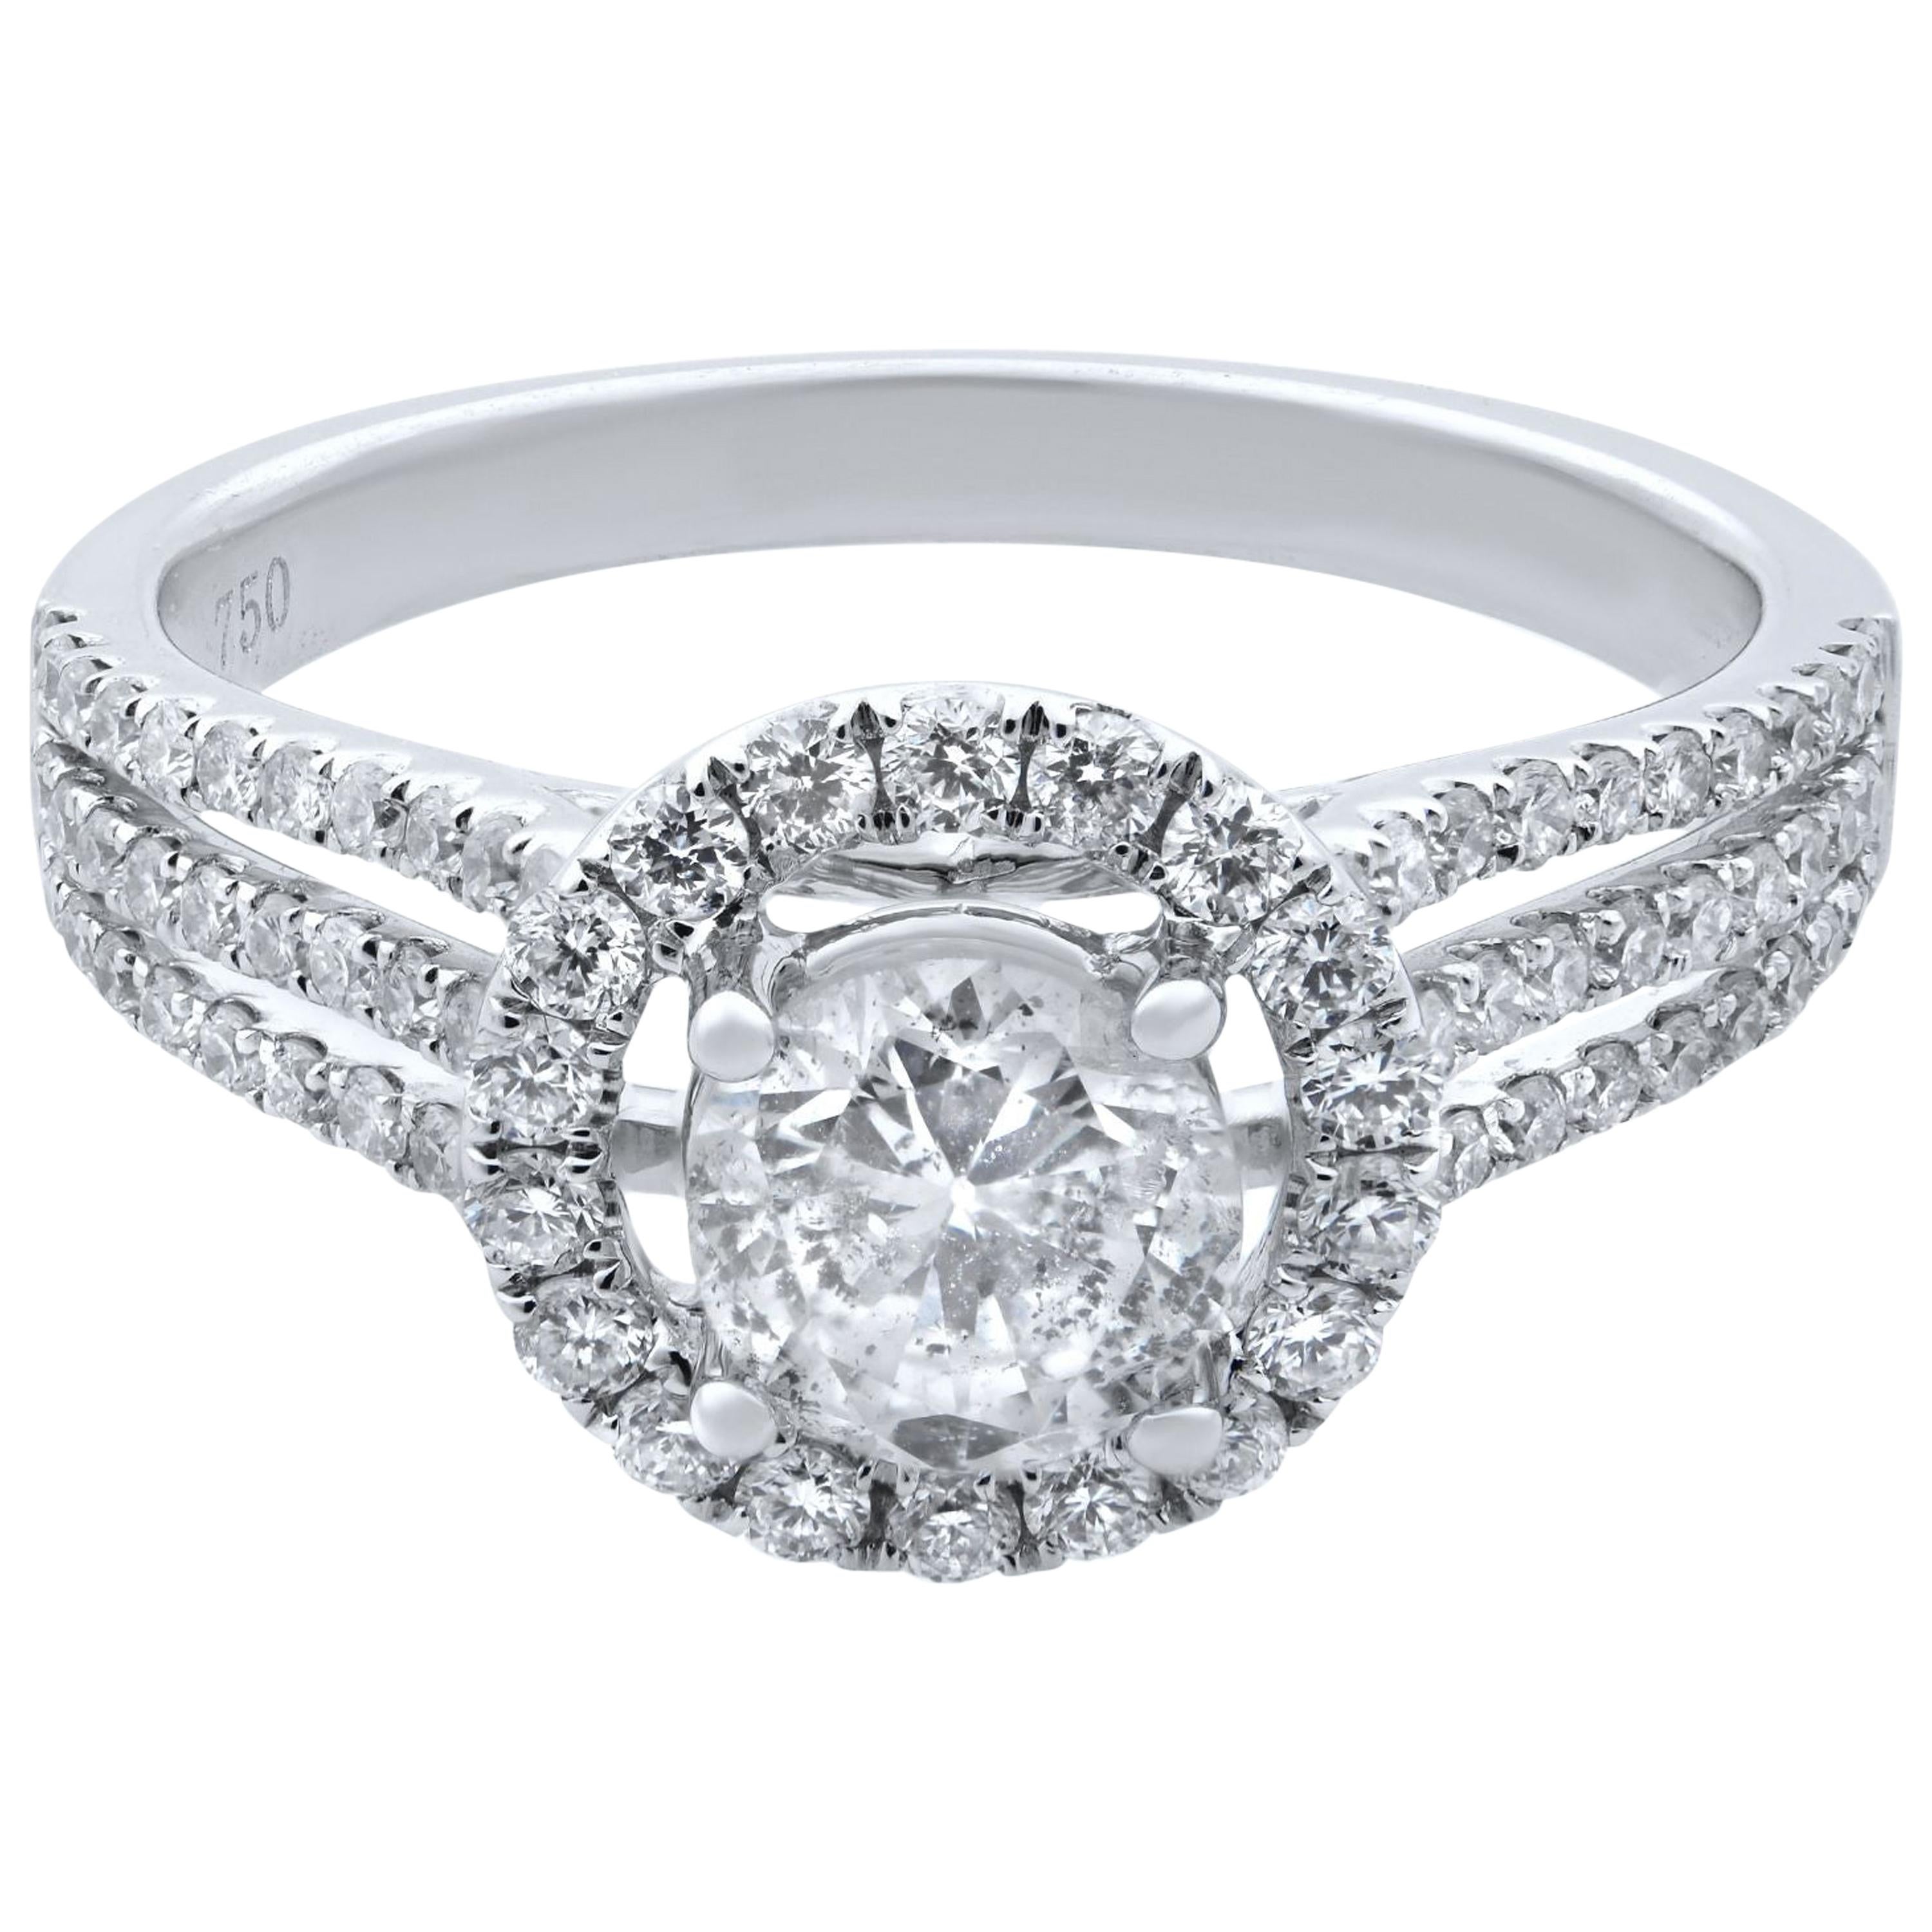 Rachel Koen Round Diamond Halo Engagement Ring 18K White Gold 1.15cts For Sale